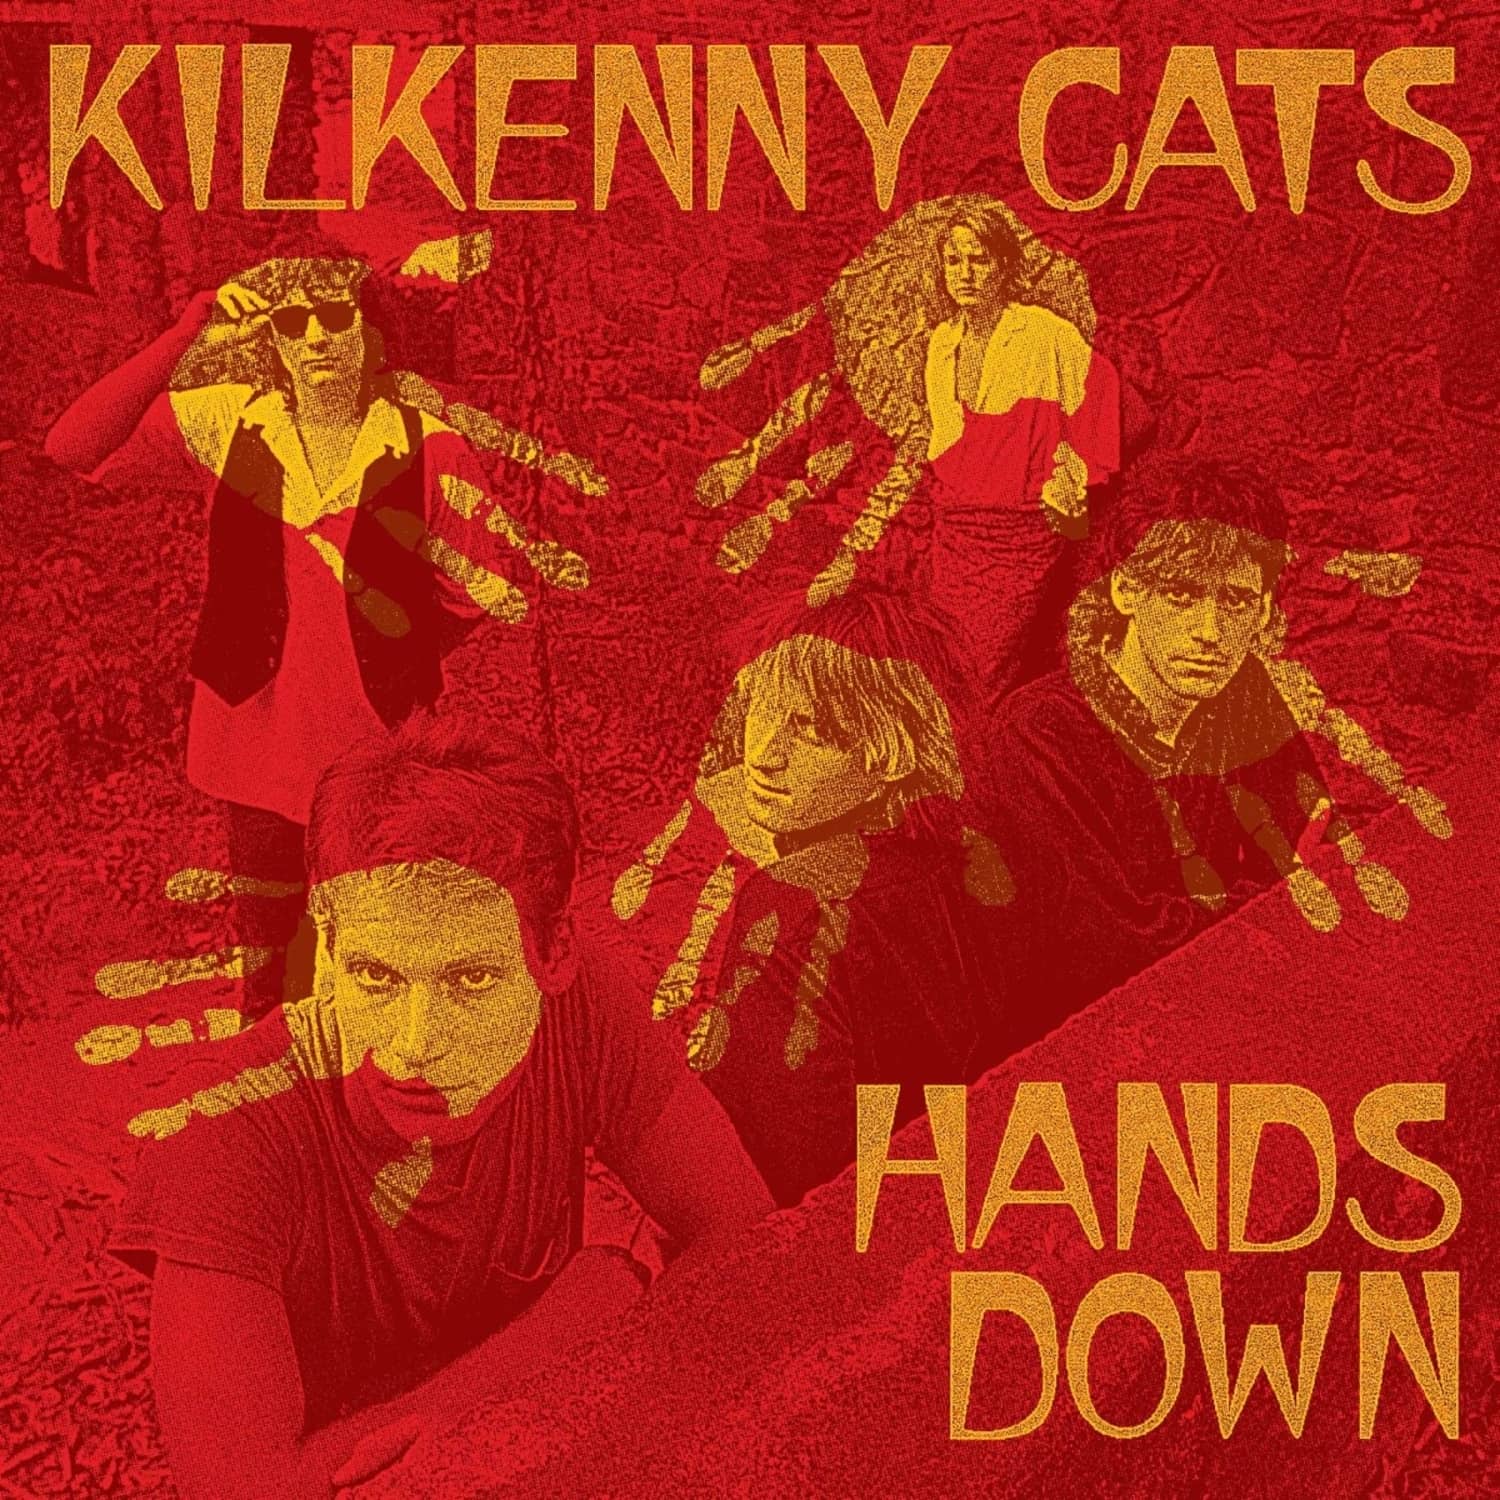 Kilkenny Cats - HANDS DOWN 